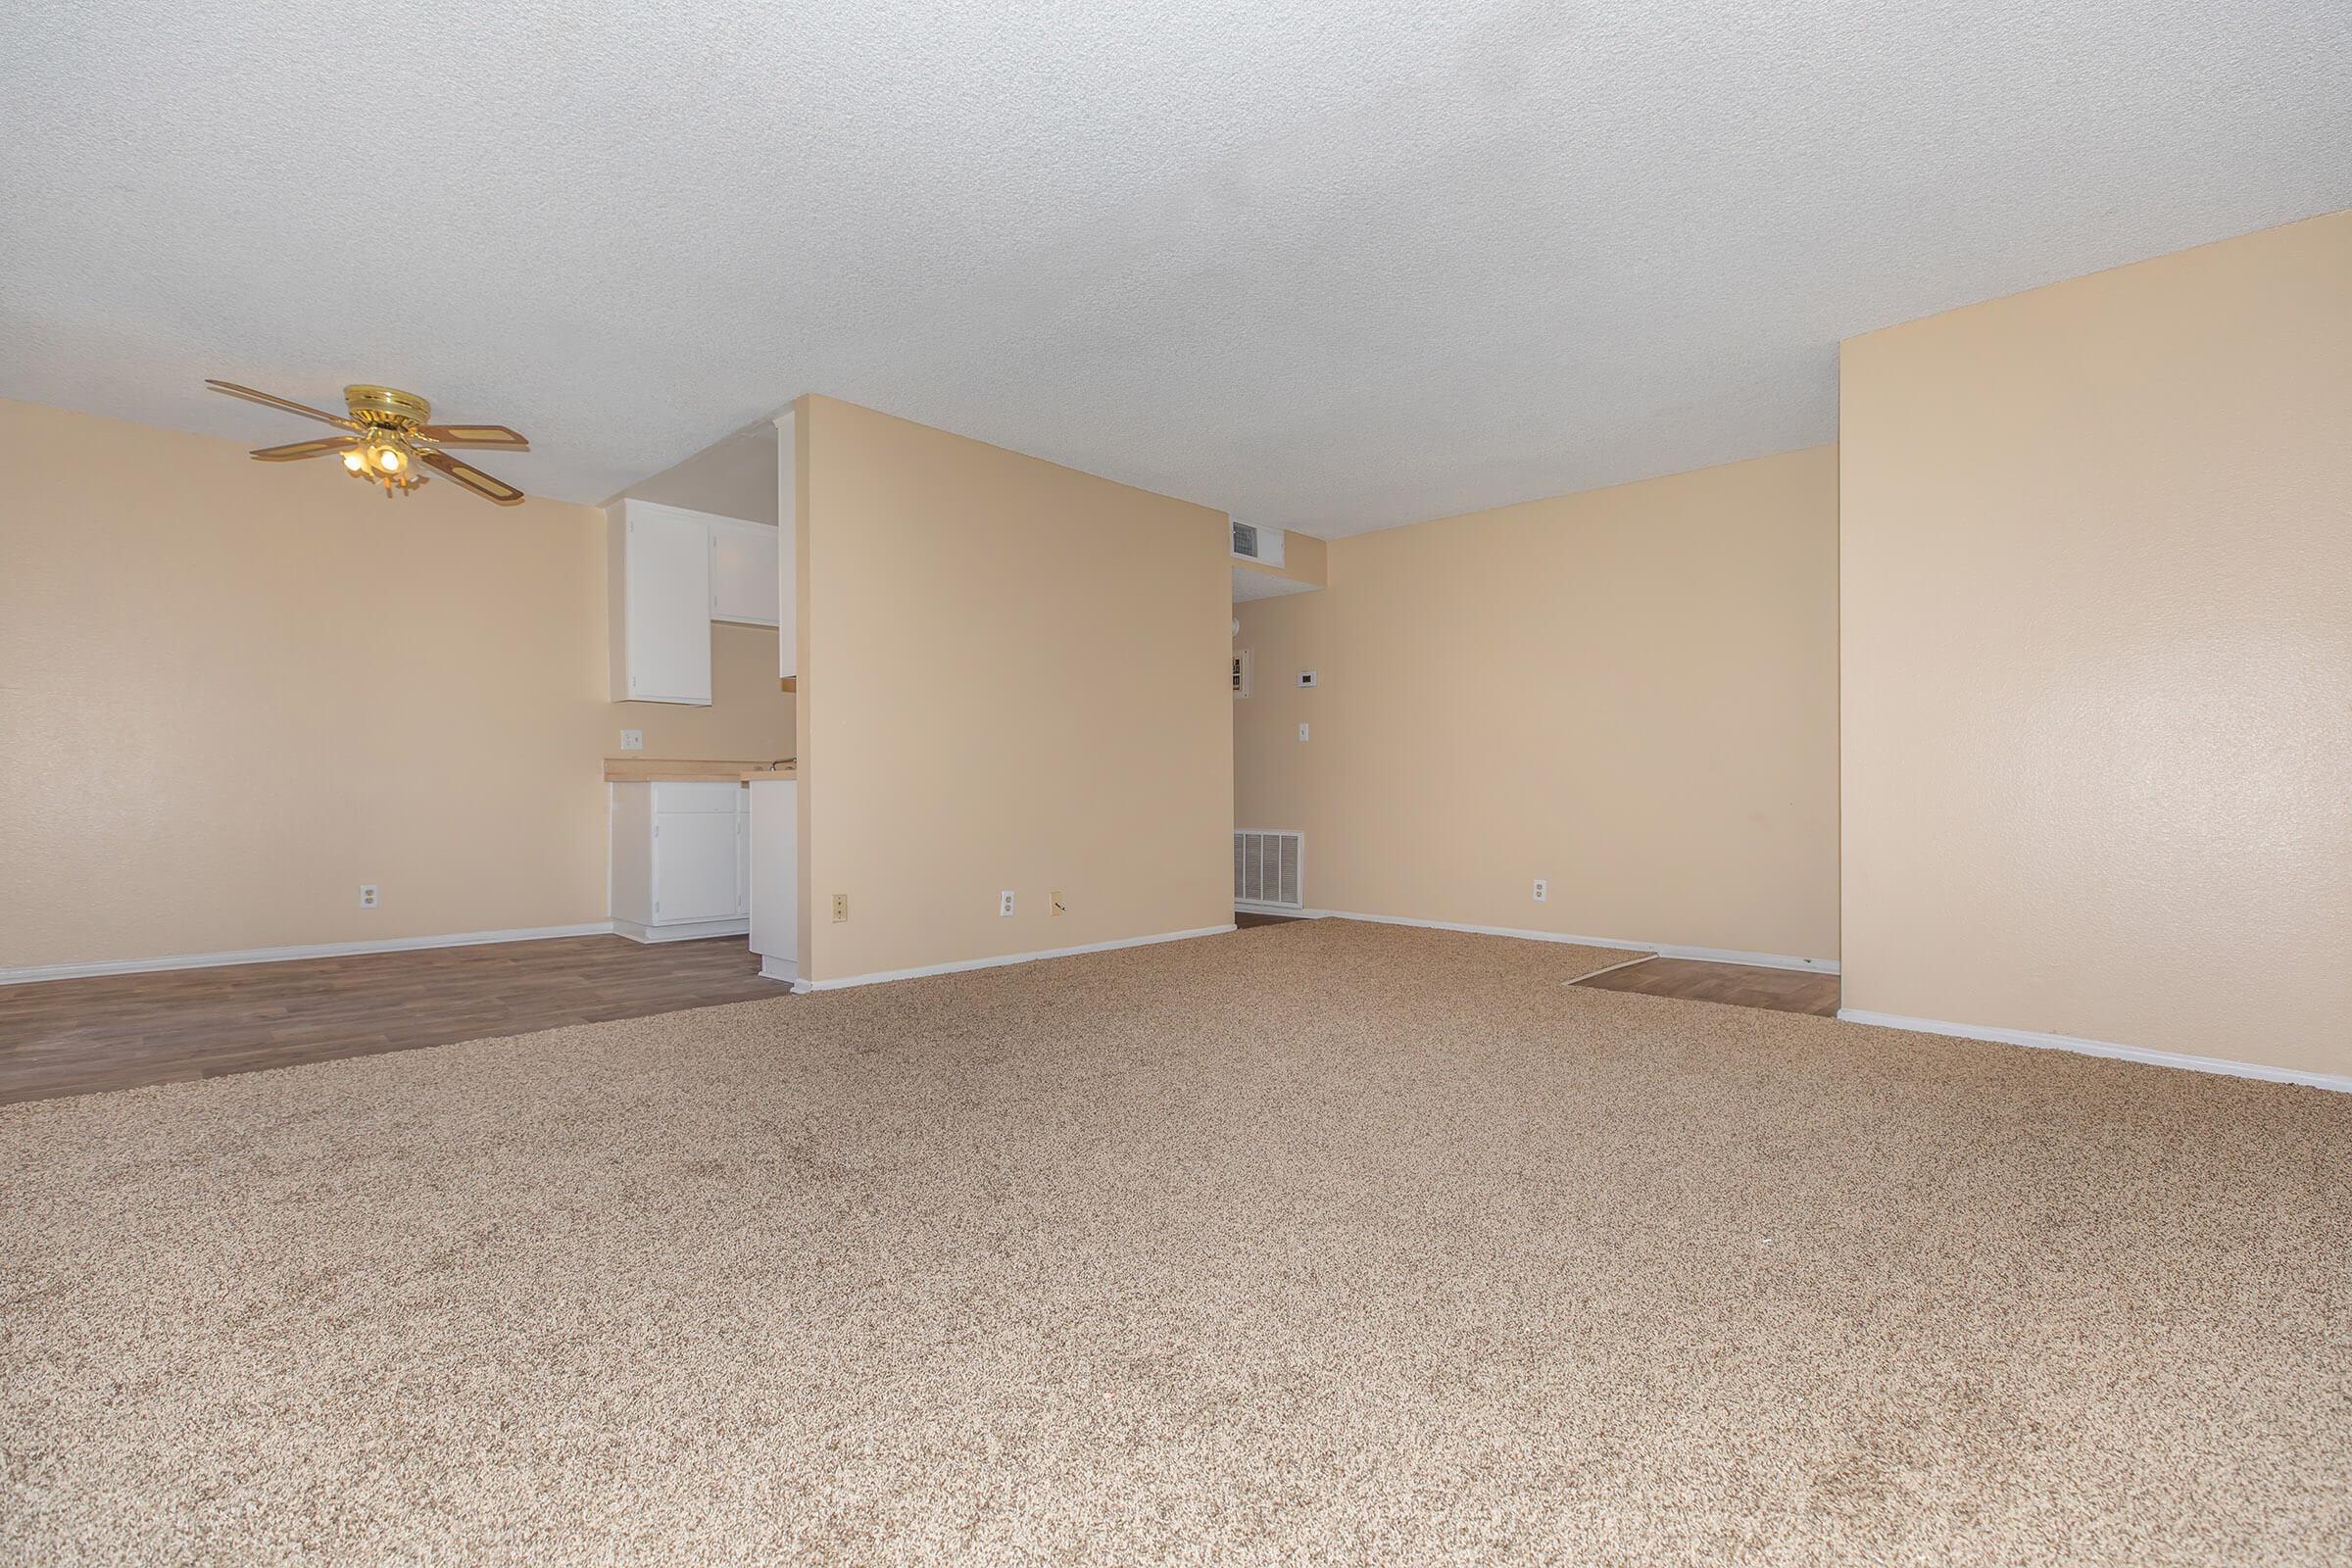 Carpeted apartment